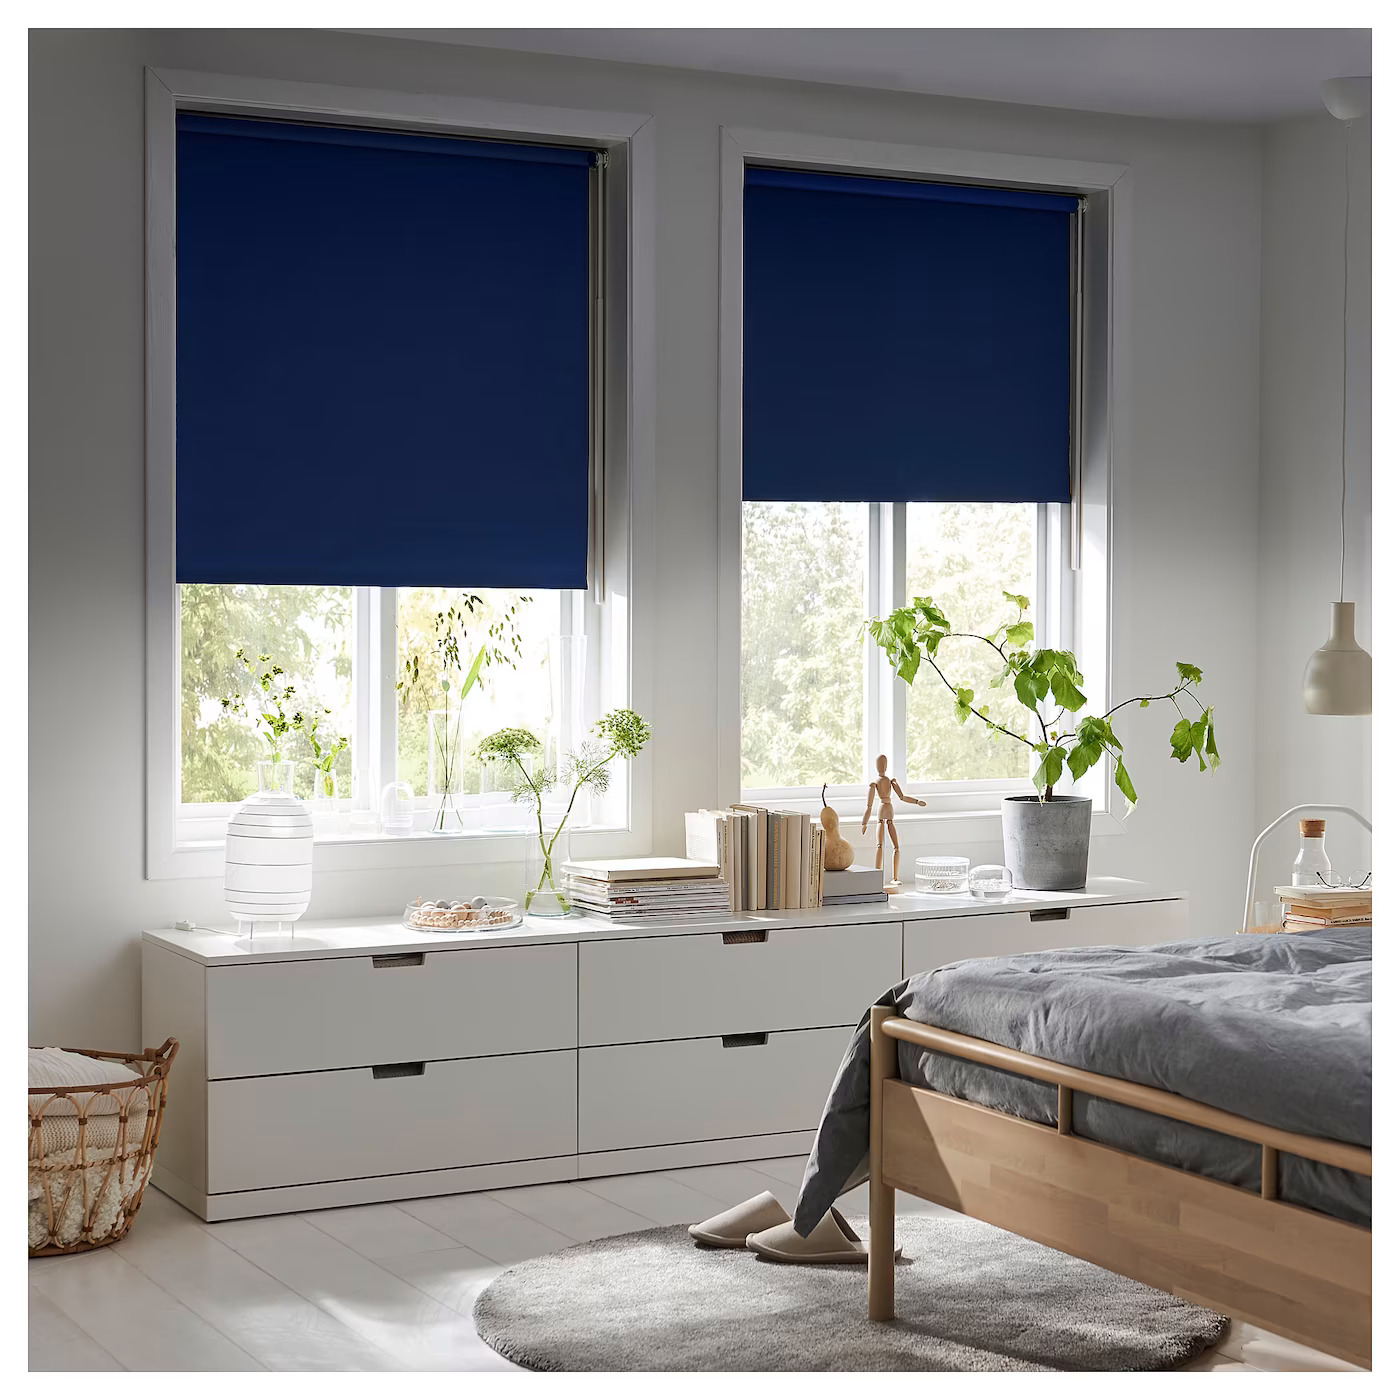 FRIDANS blackout roller blinds by Ikea